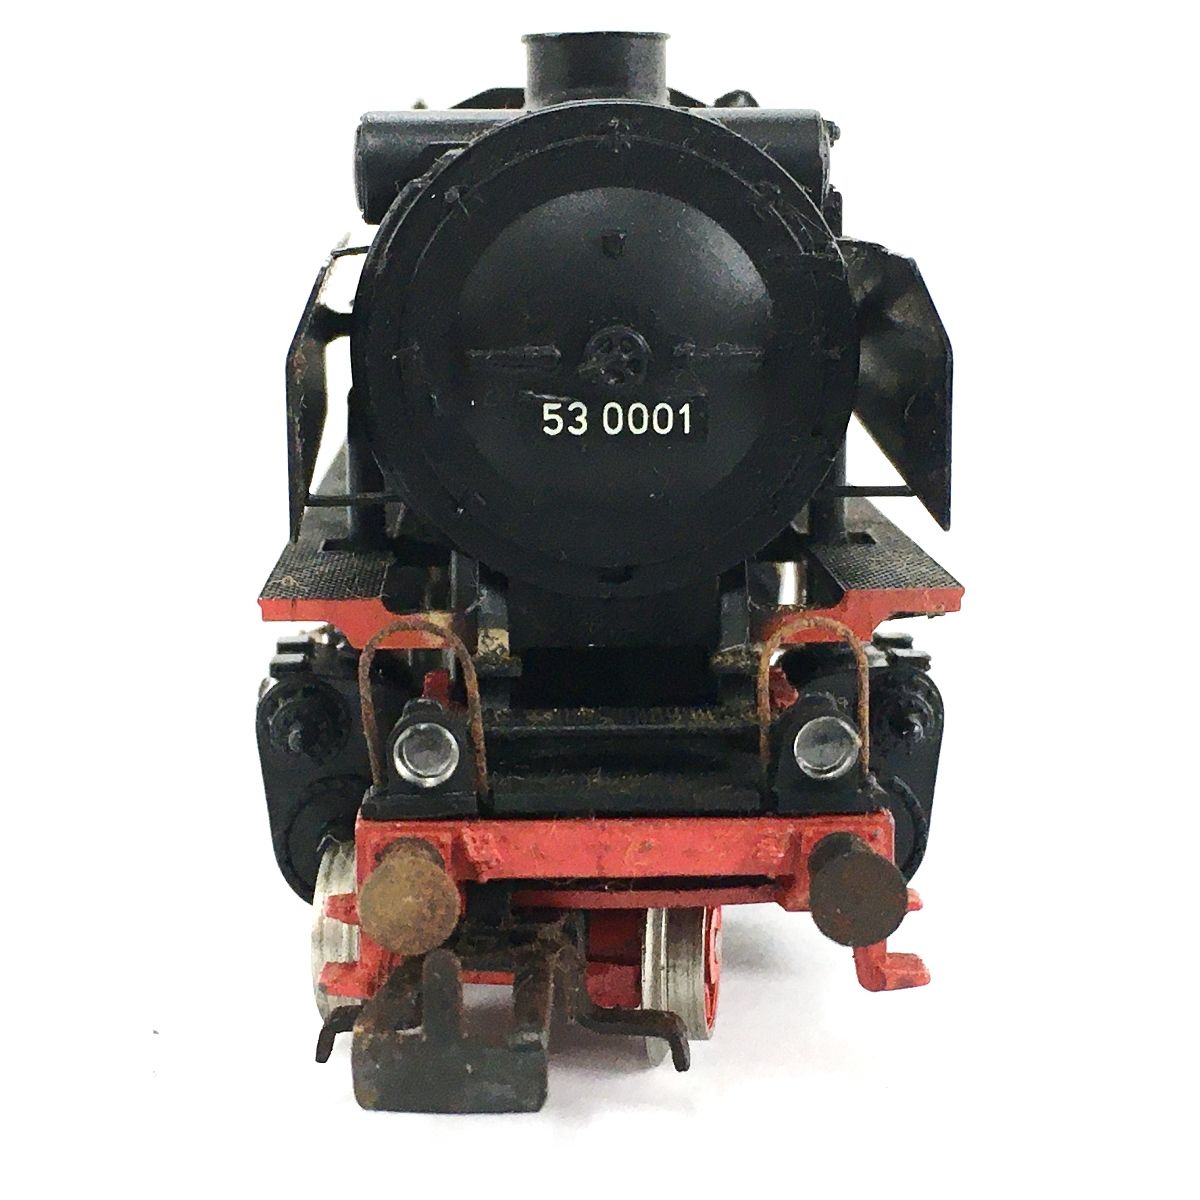 Marklin メルクリン 3102 BR53 0001 蒸気機関車 鉄道模型 HO ジャンク 